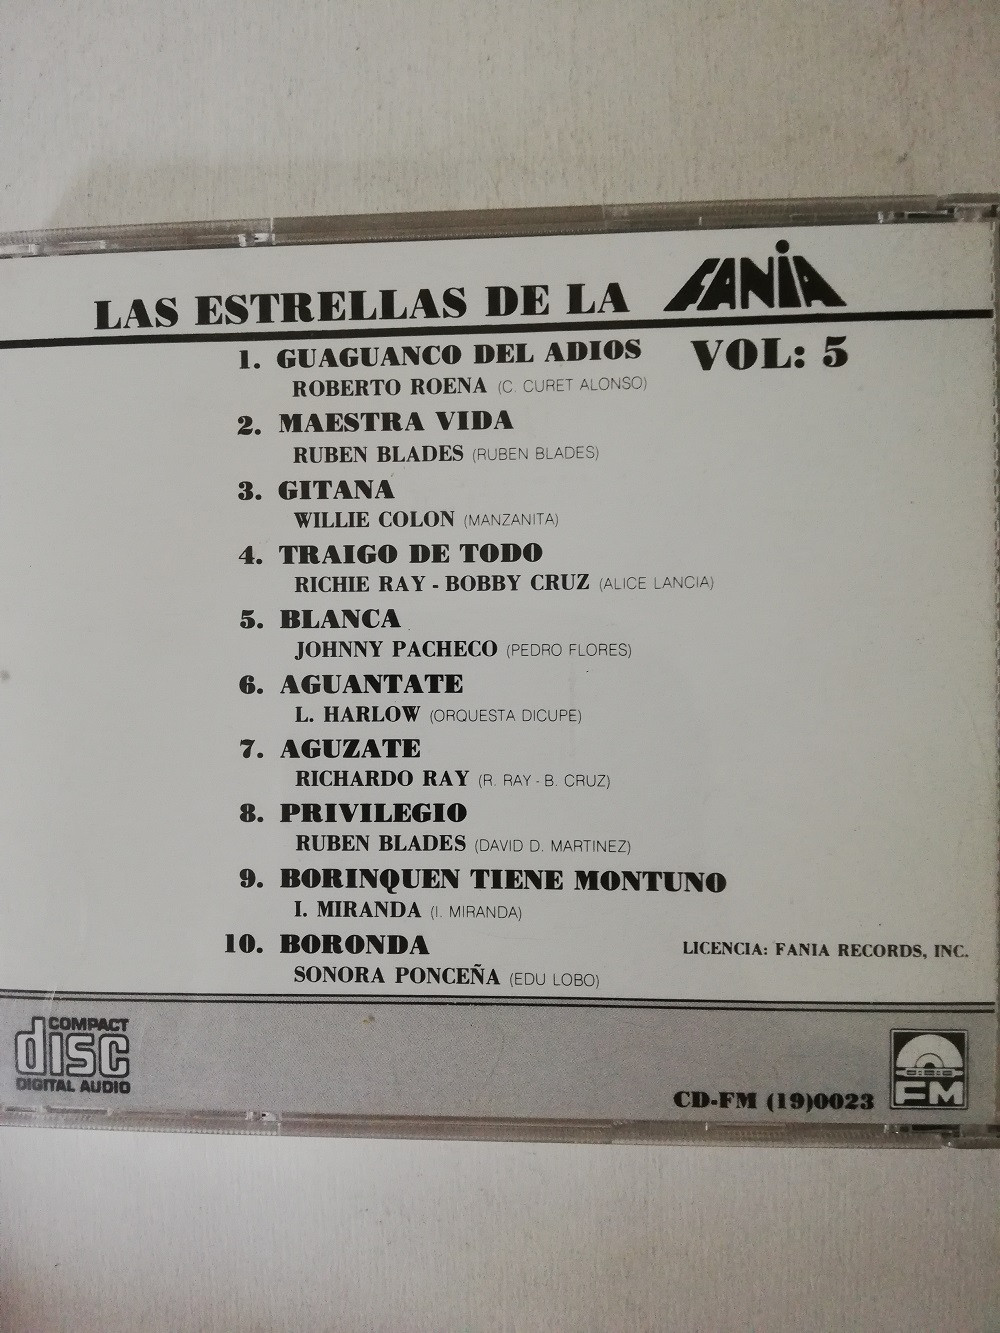 Imagen CD FANIA ALL STARS - LAS ESTRELLAS DE LA FANIA VOL. 5 2